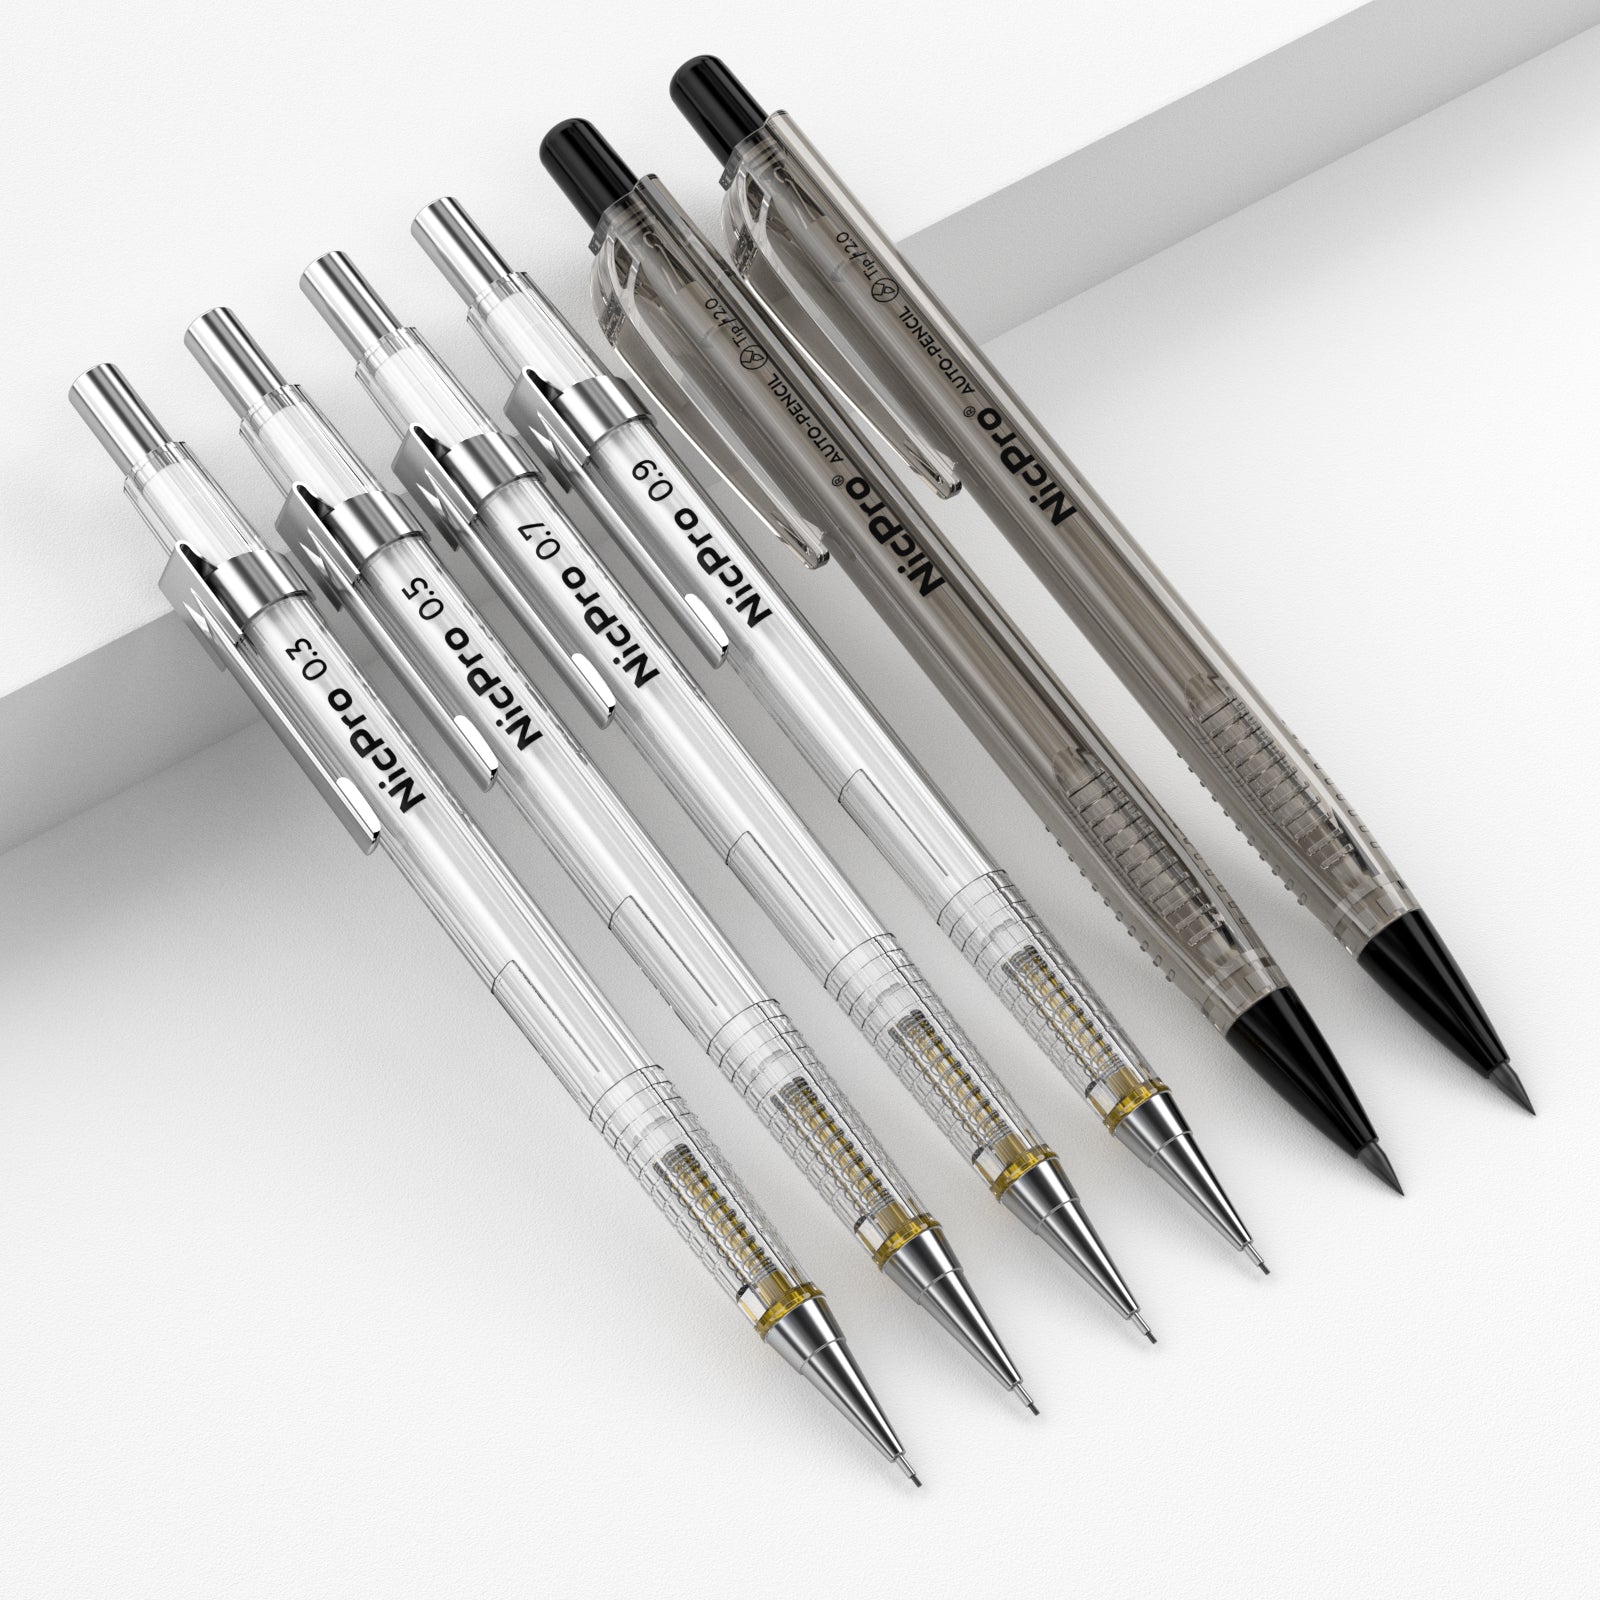 Nicpro 6pcs Art Mechanical Pencils Set, Incl 3 Metal Drafting